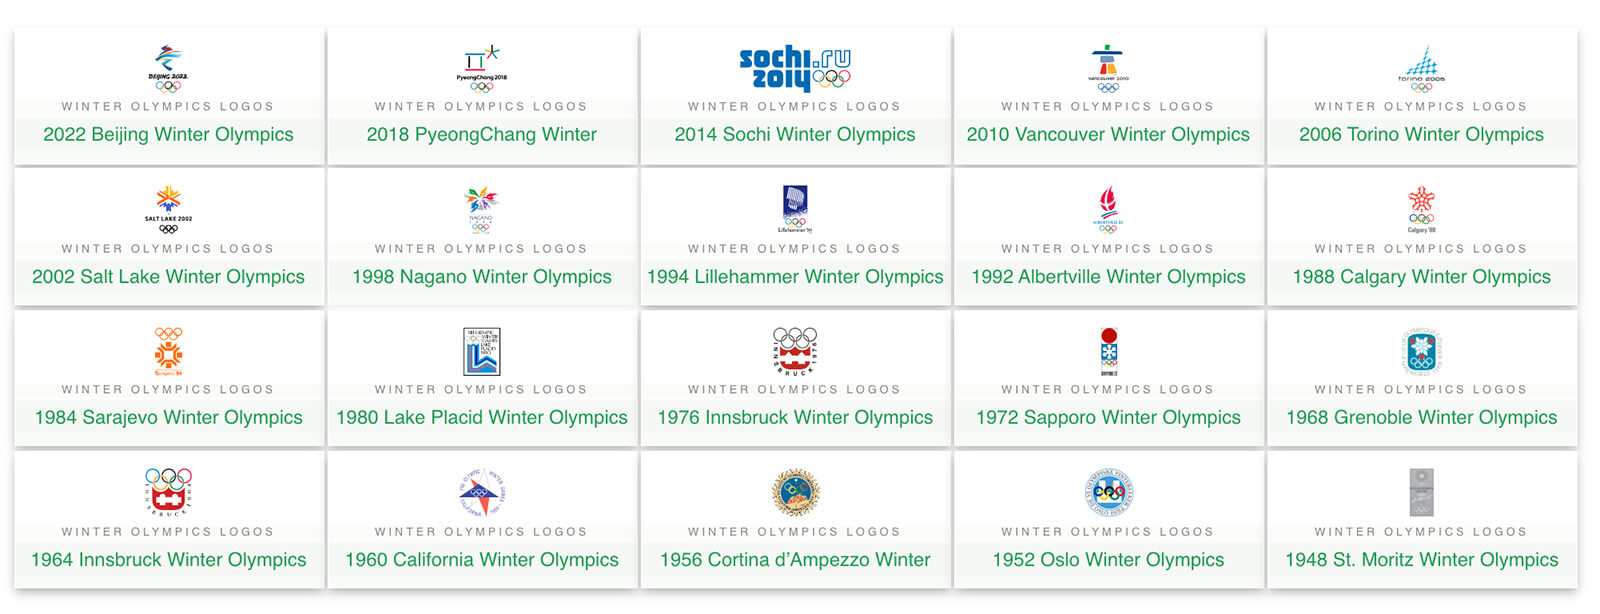 Winter Olympics logos